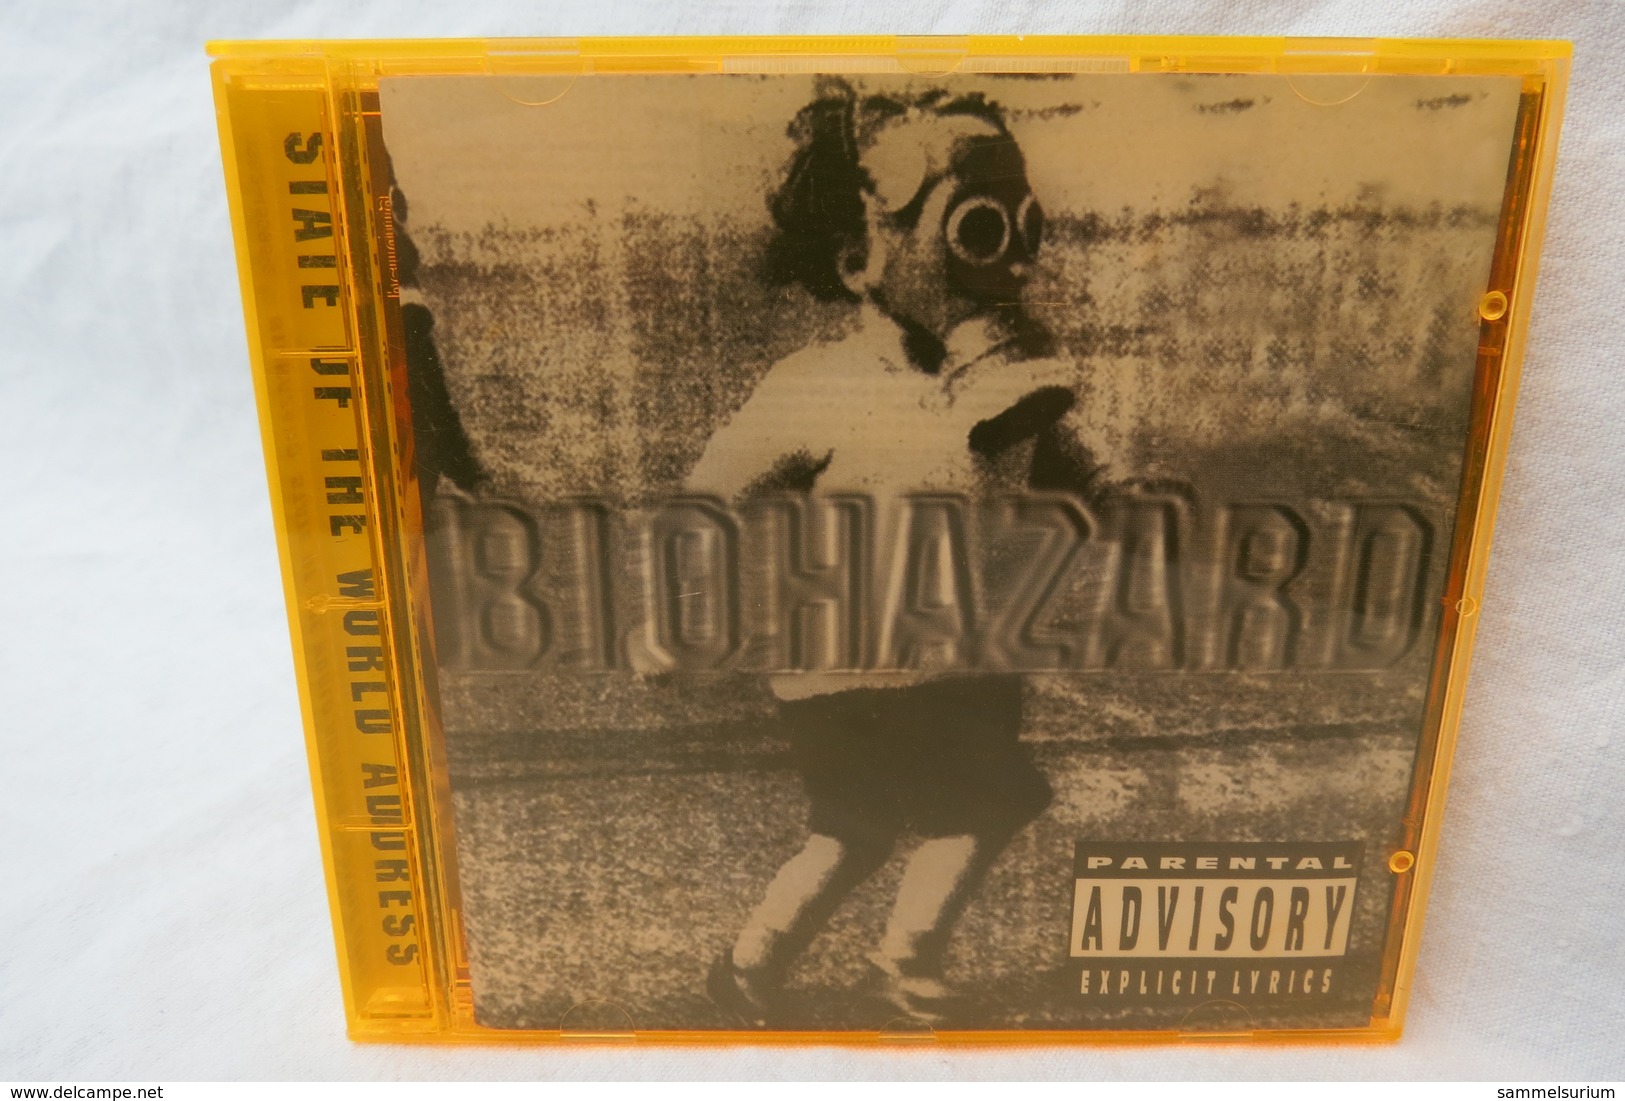 CD "Biohazard" State Of The World Address (parental Advisory Explicit Lyrics) - Limited Editions